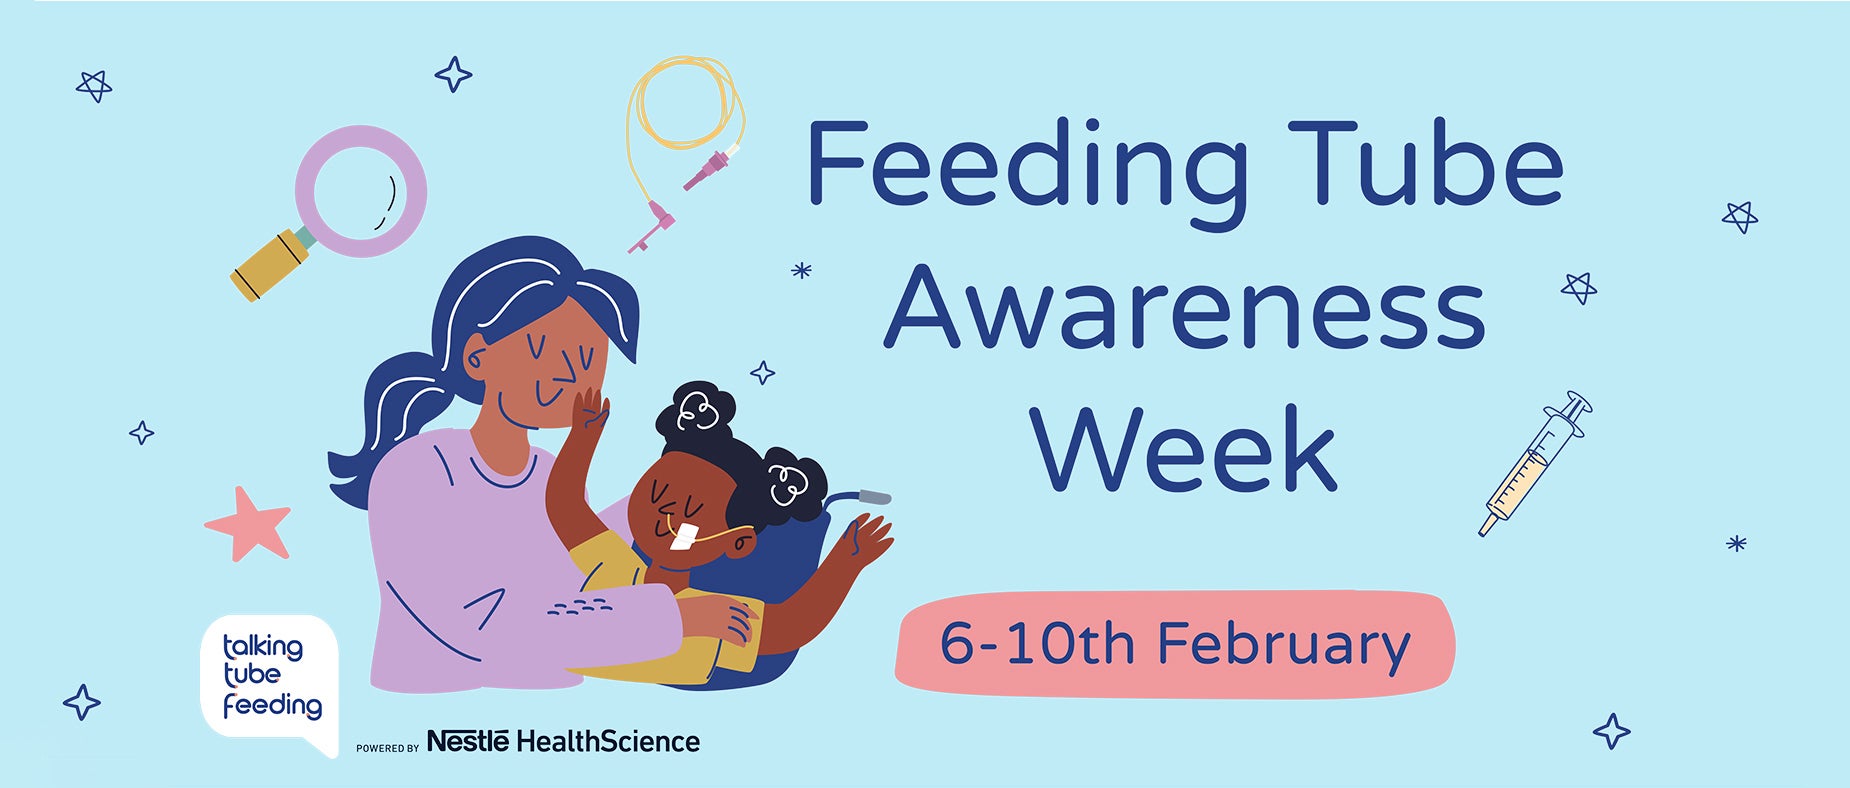 tube feeding awareness week poster